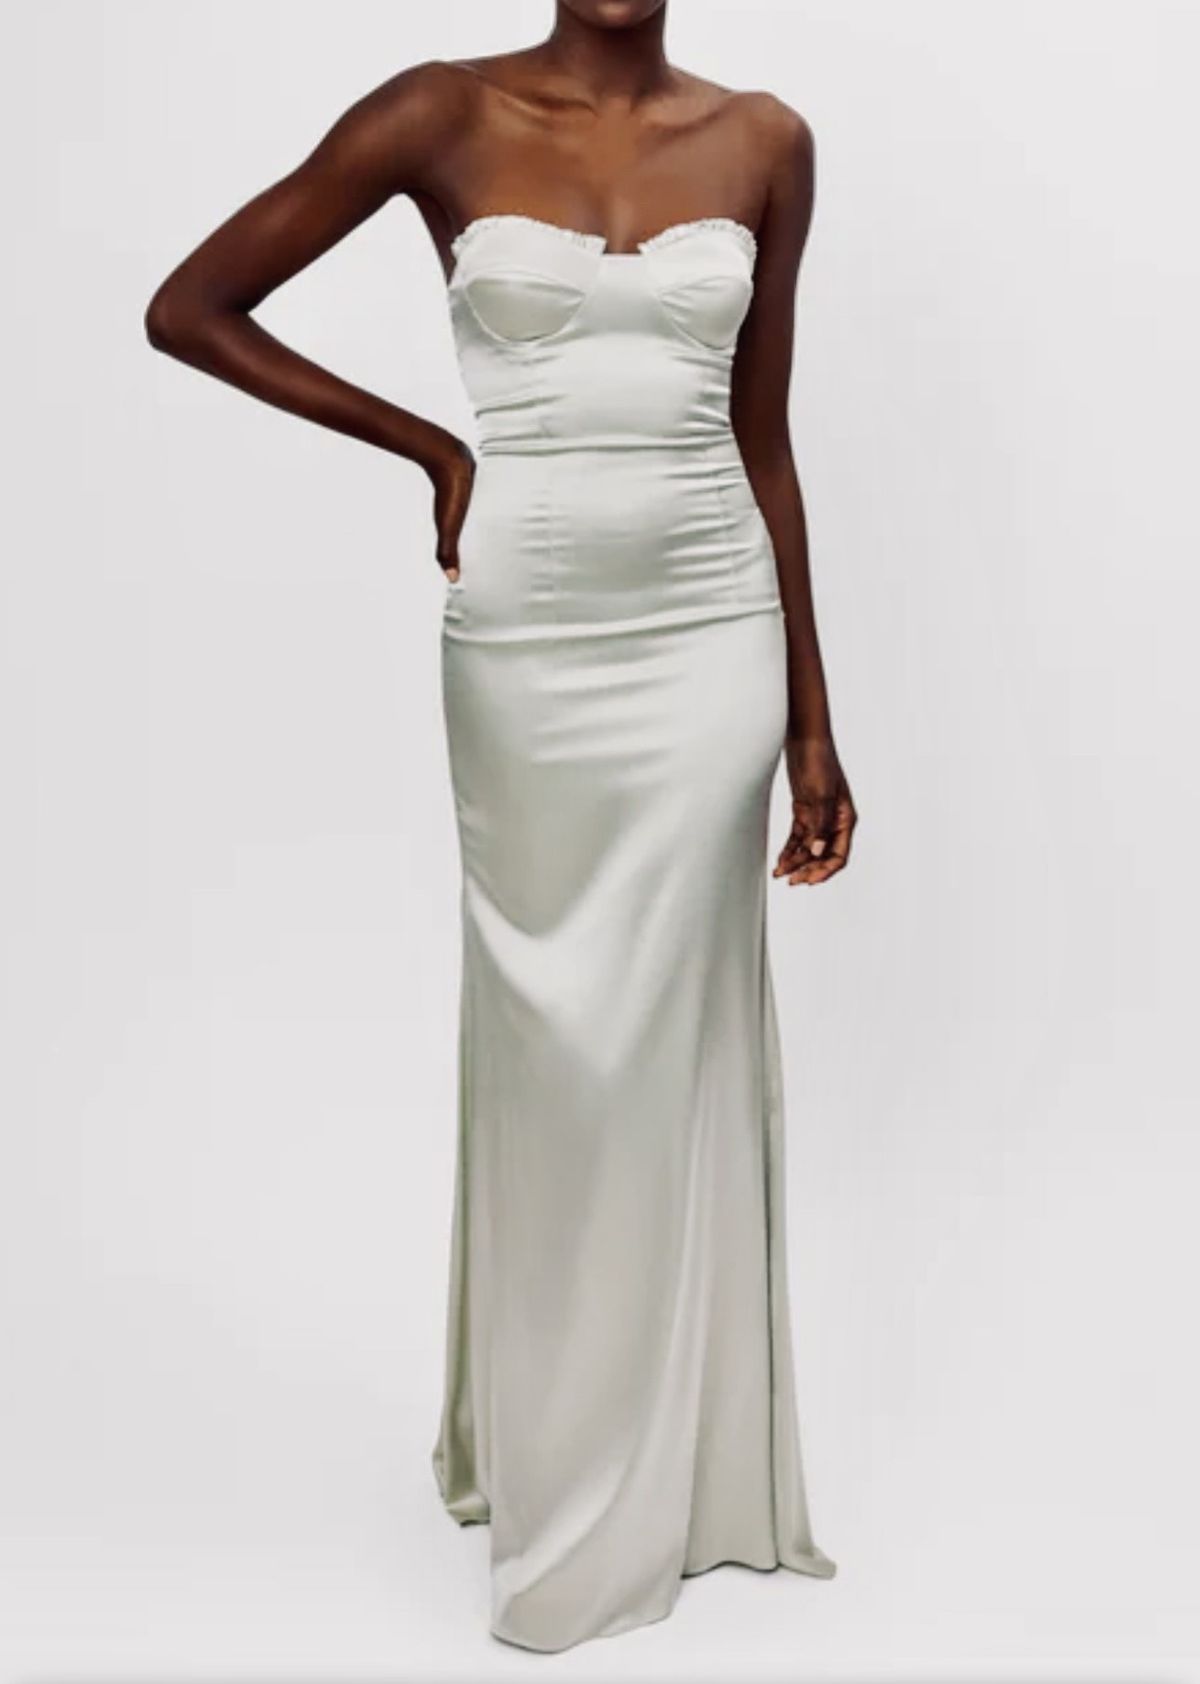 Style MIRA SILK GOWN Lurelly Size 12 Wedding Strapless Satin White Mermaid Dress on Queenly